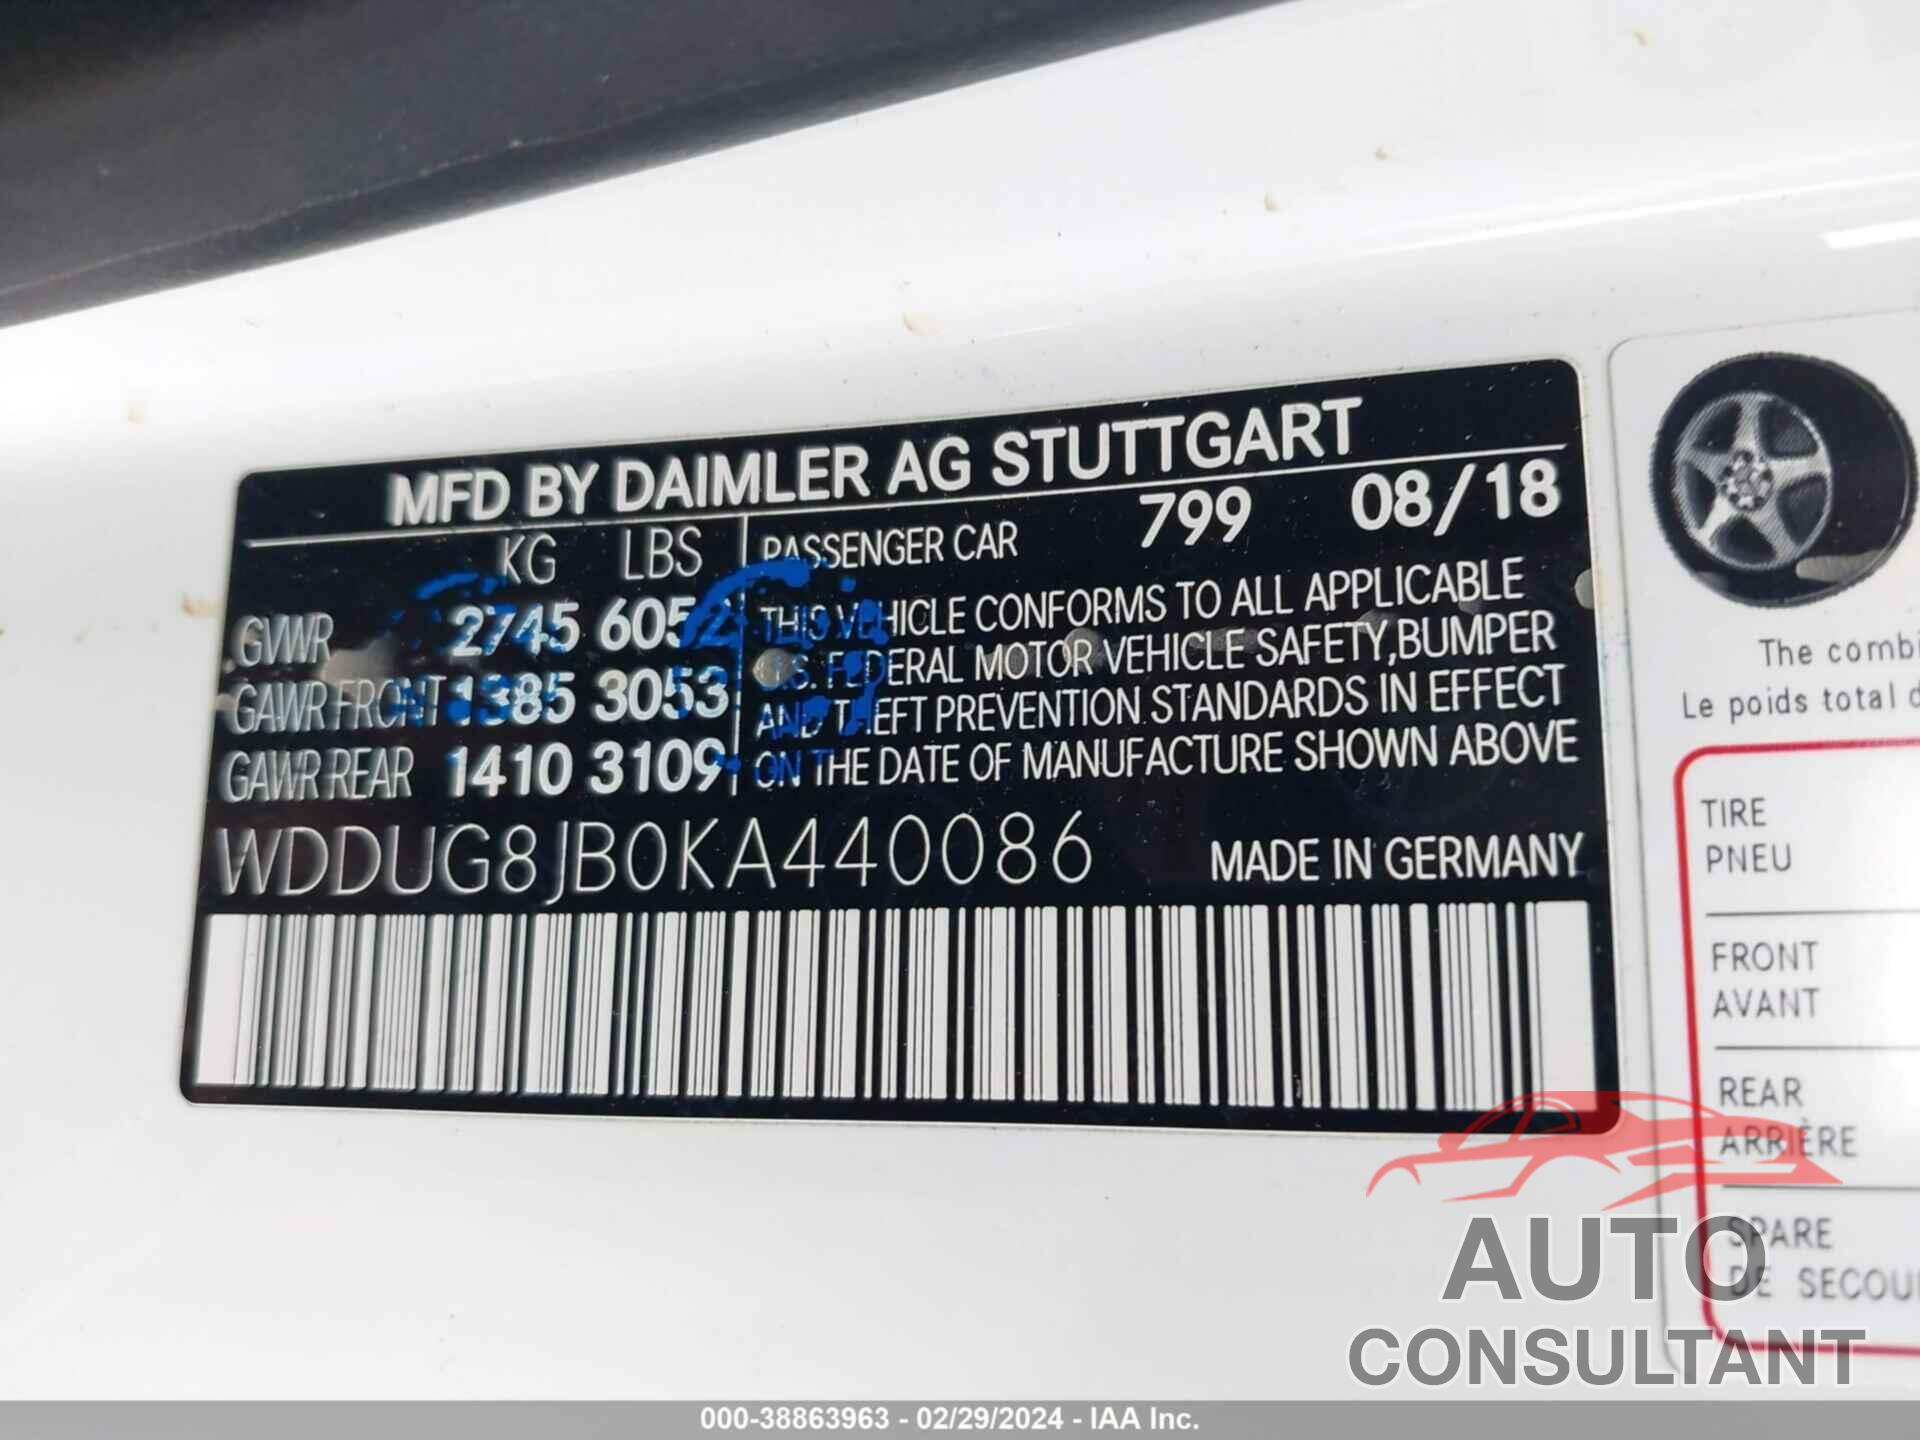 MERCEDES-BENZ AMG S 63 2019 - WDDUG8JB0KA440086